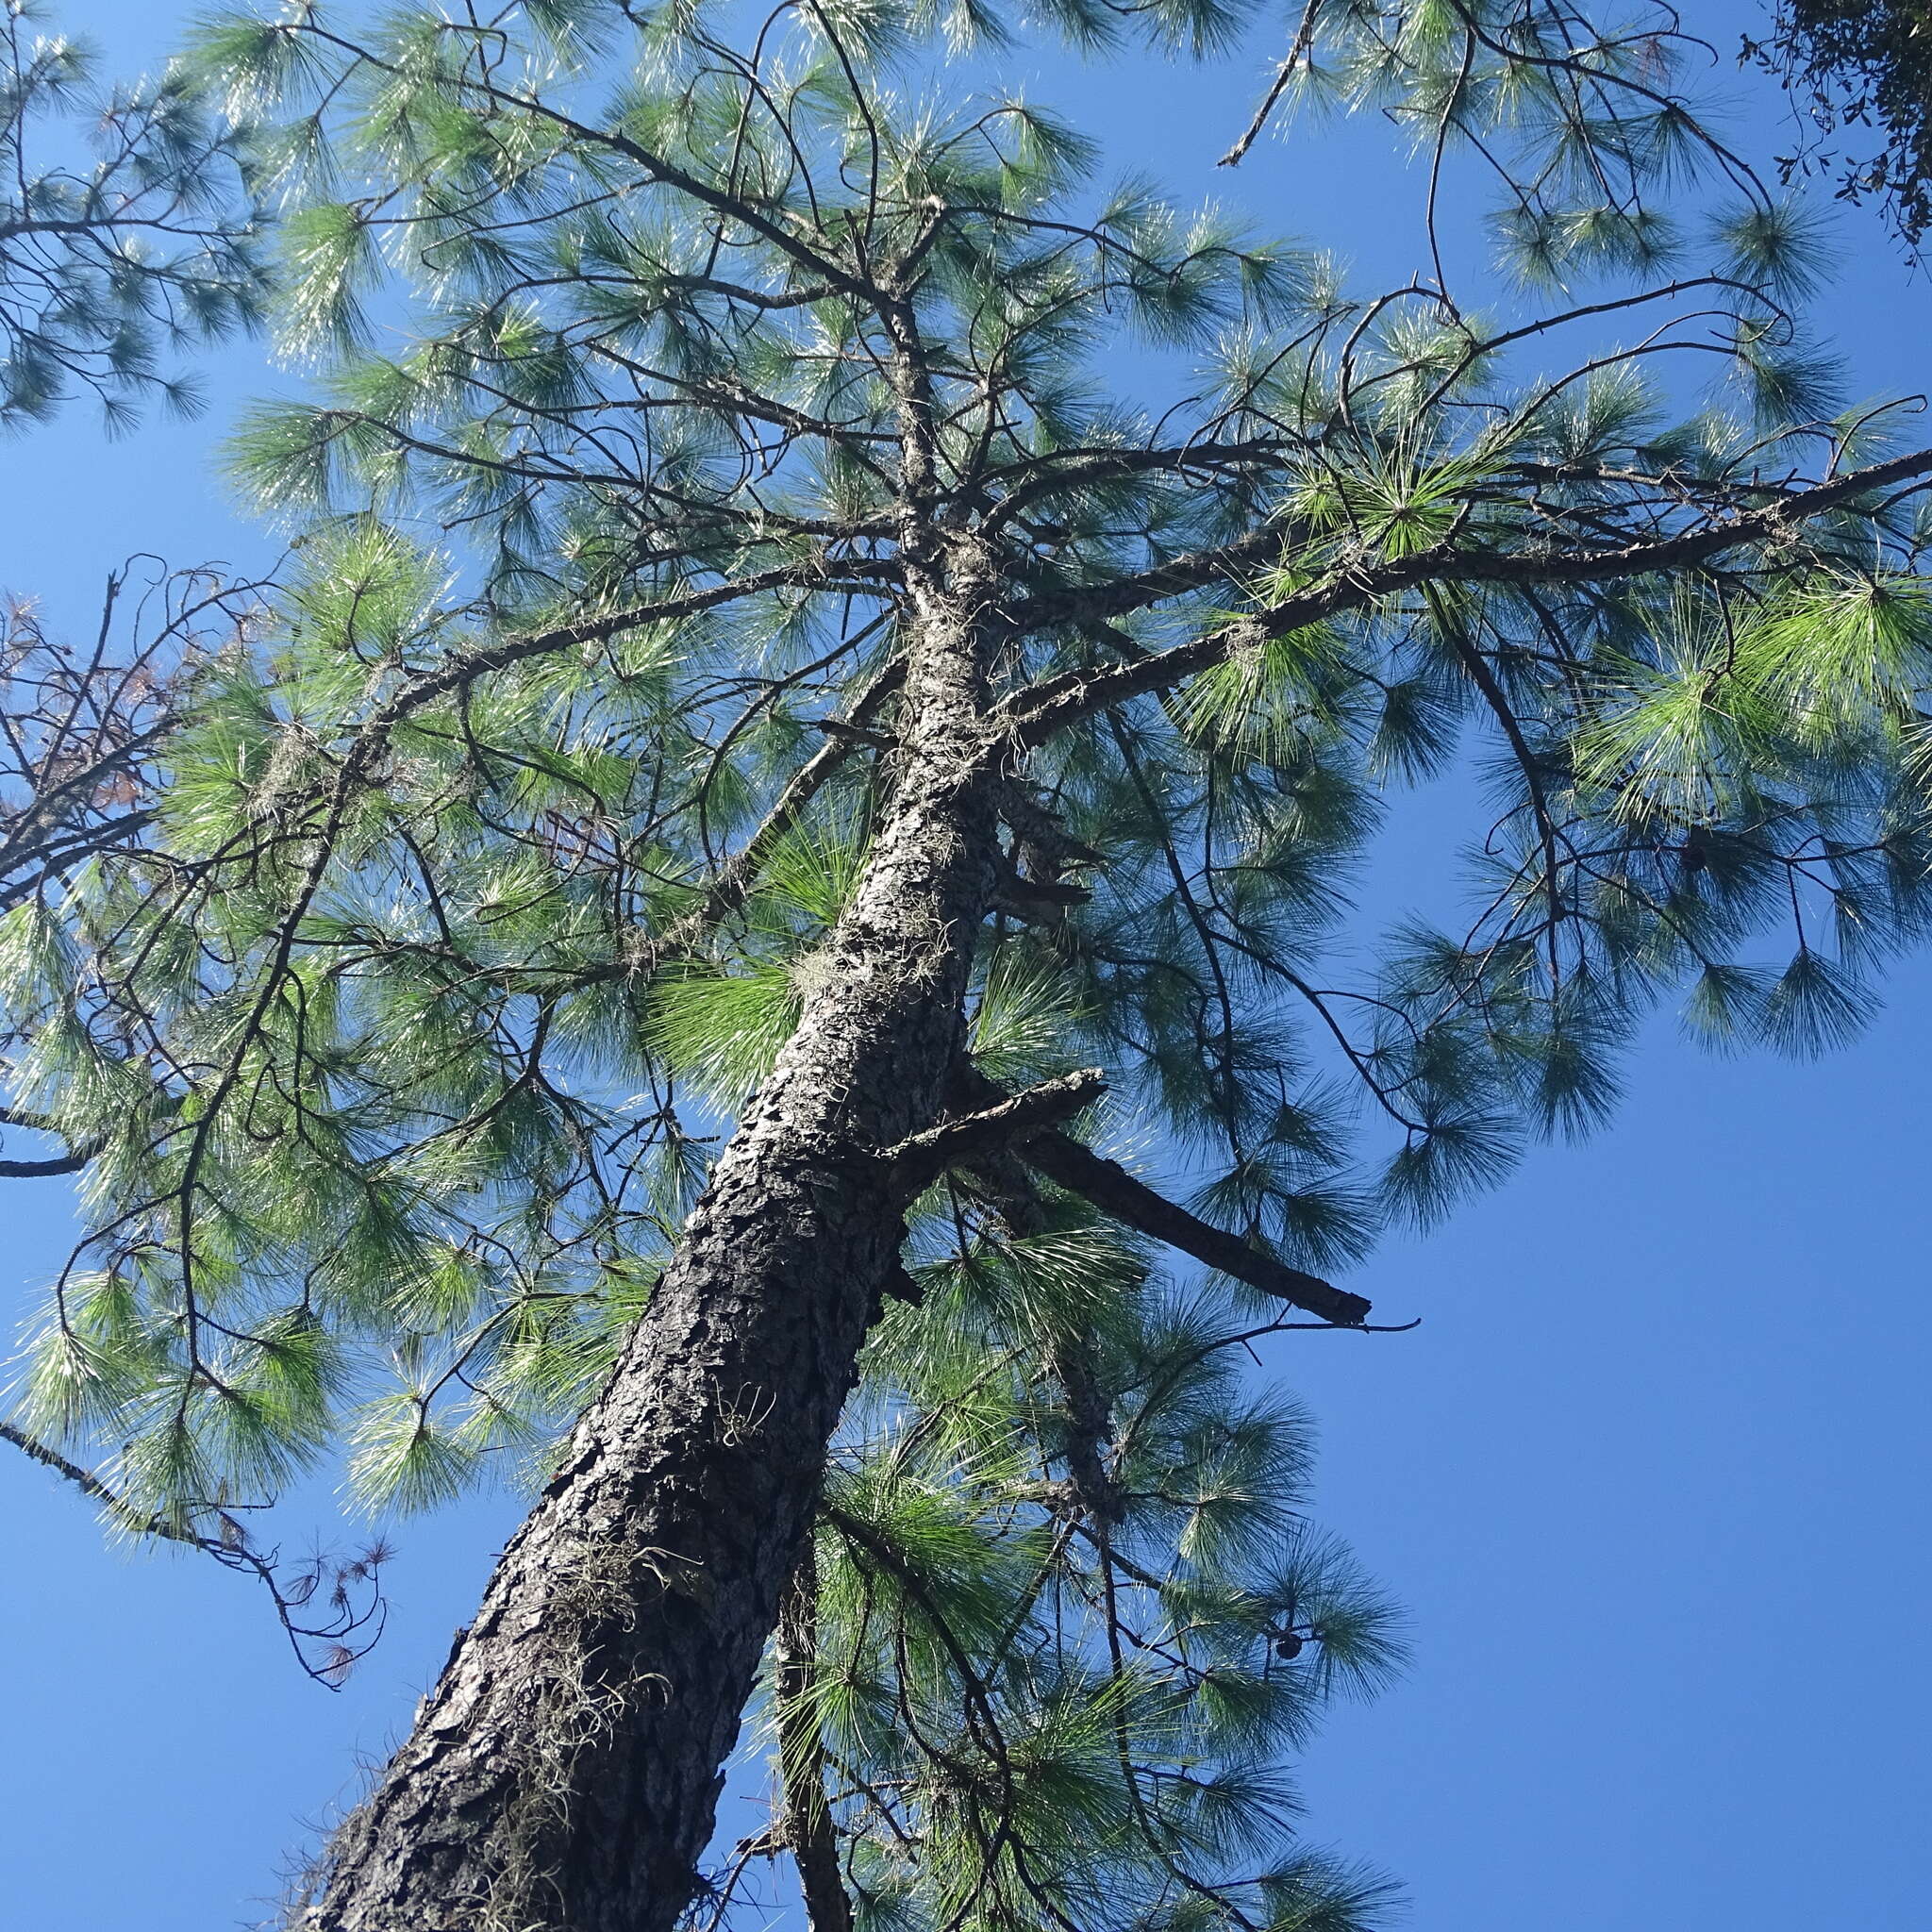 Image of south florida slash pine